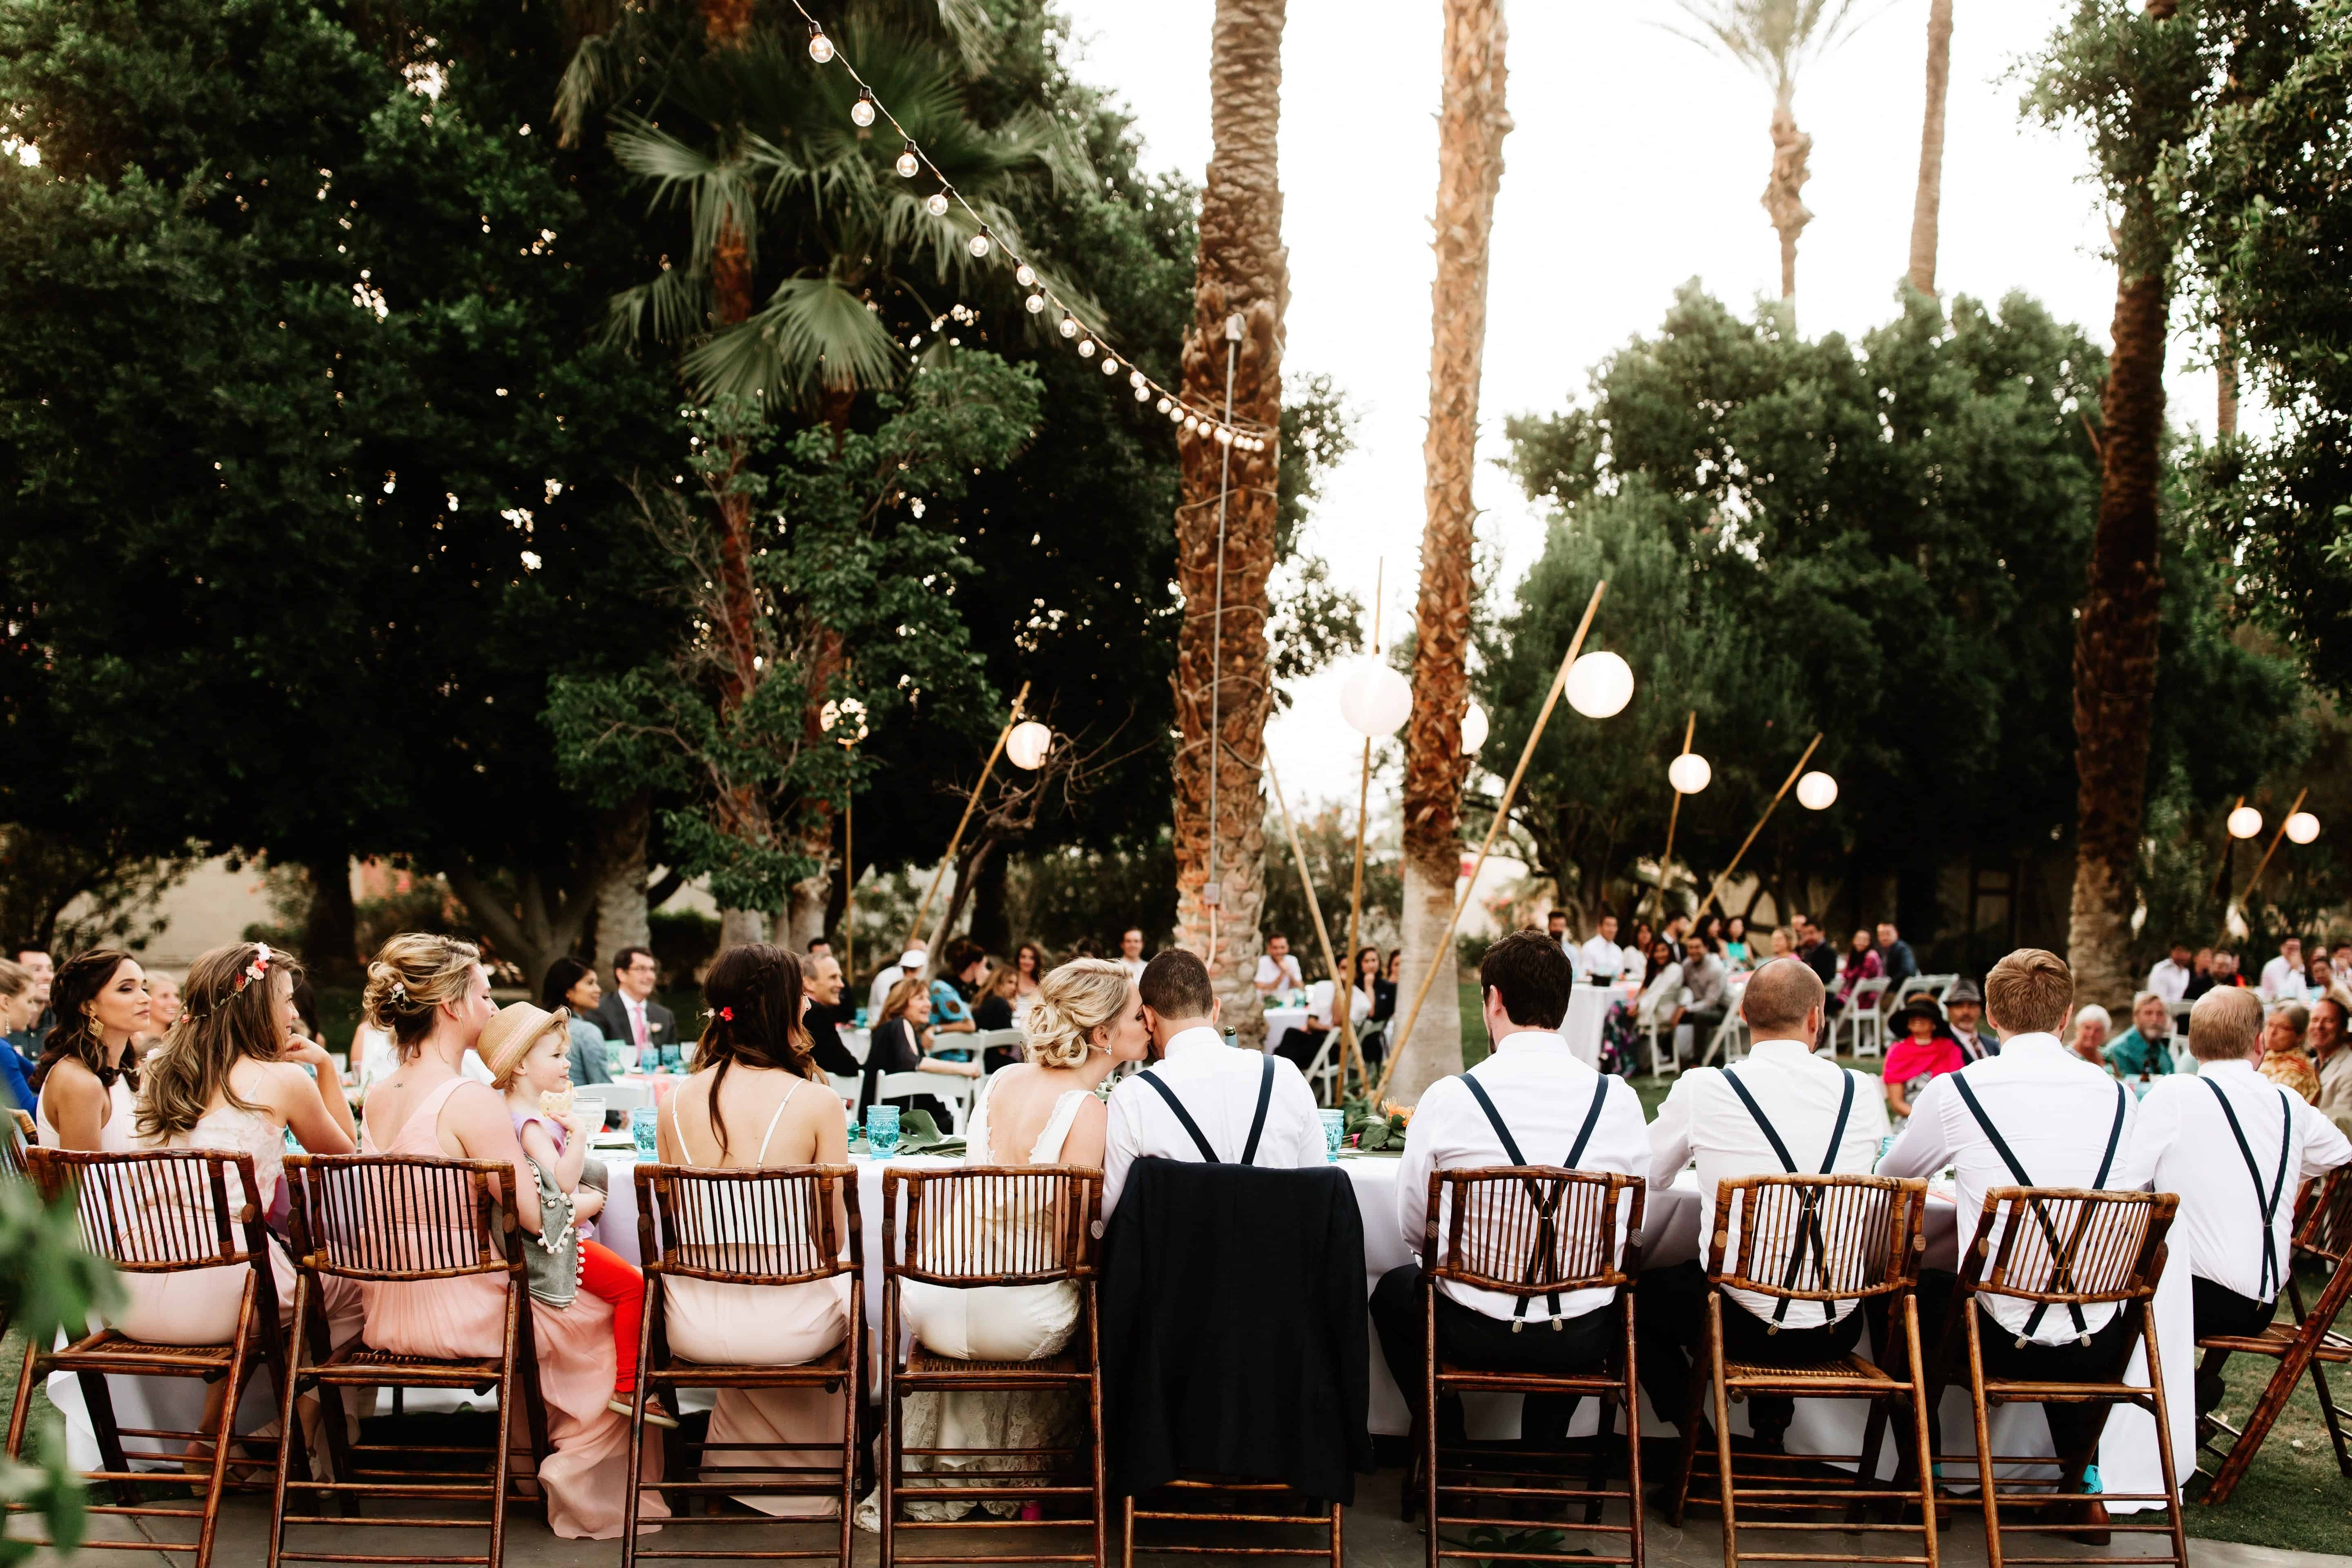 18.SIMPHOME.COM A backyard wedding ideas brides feature 10 extra ideas